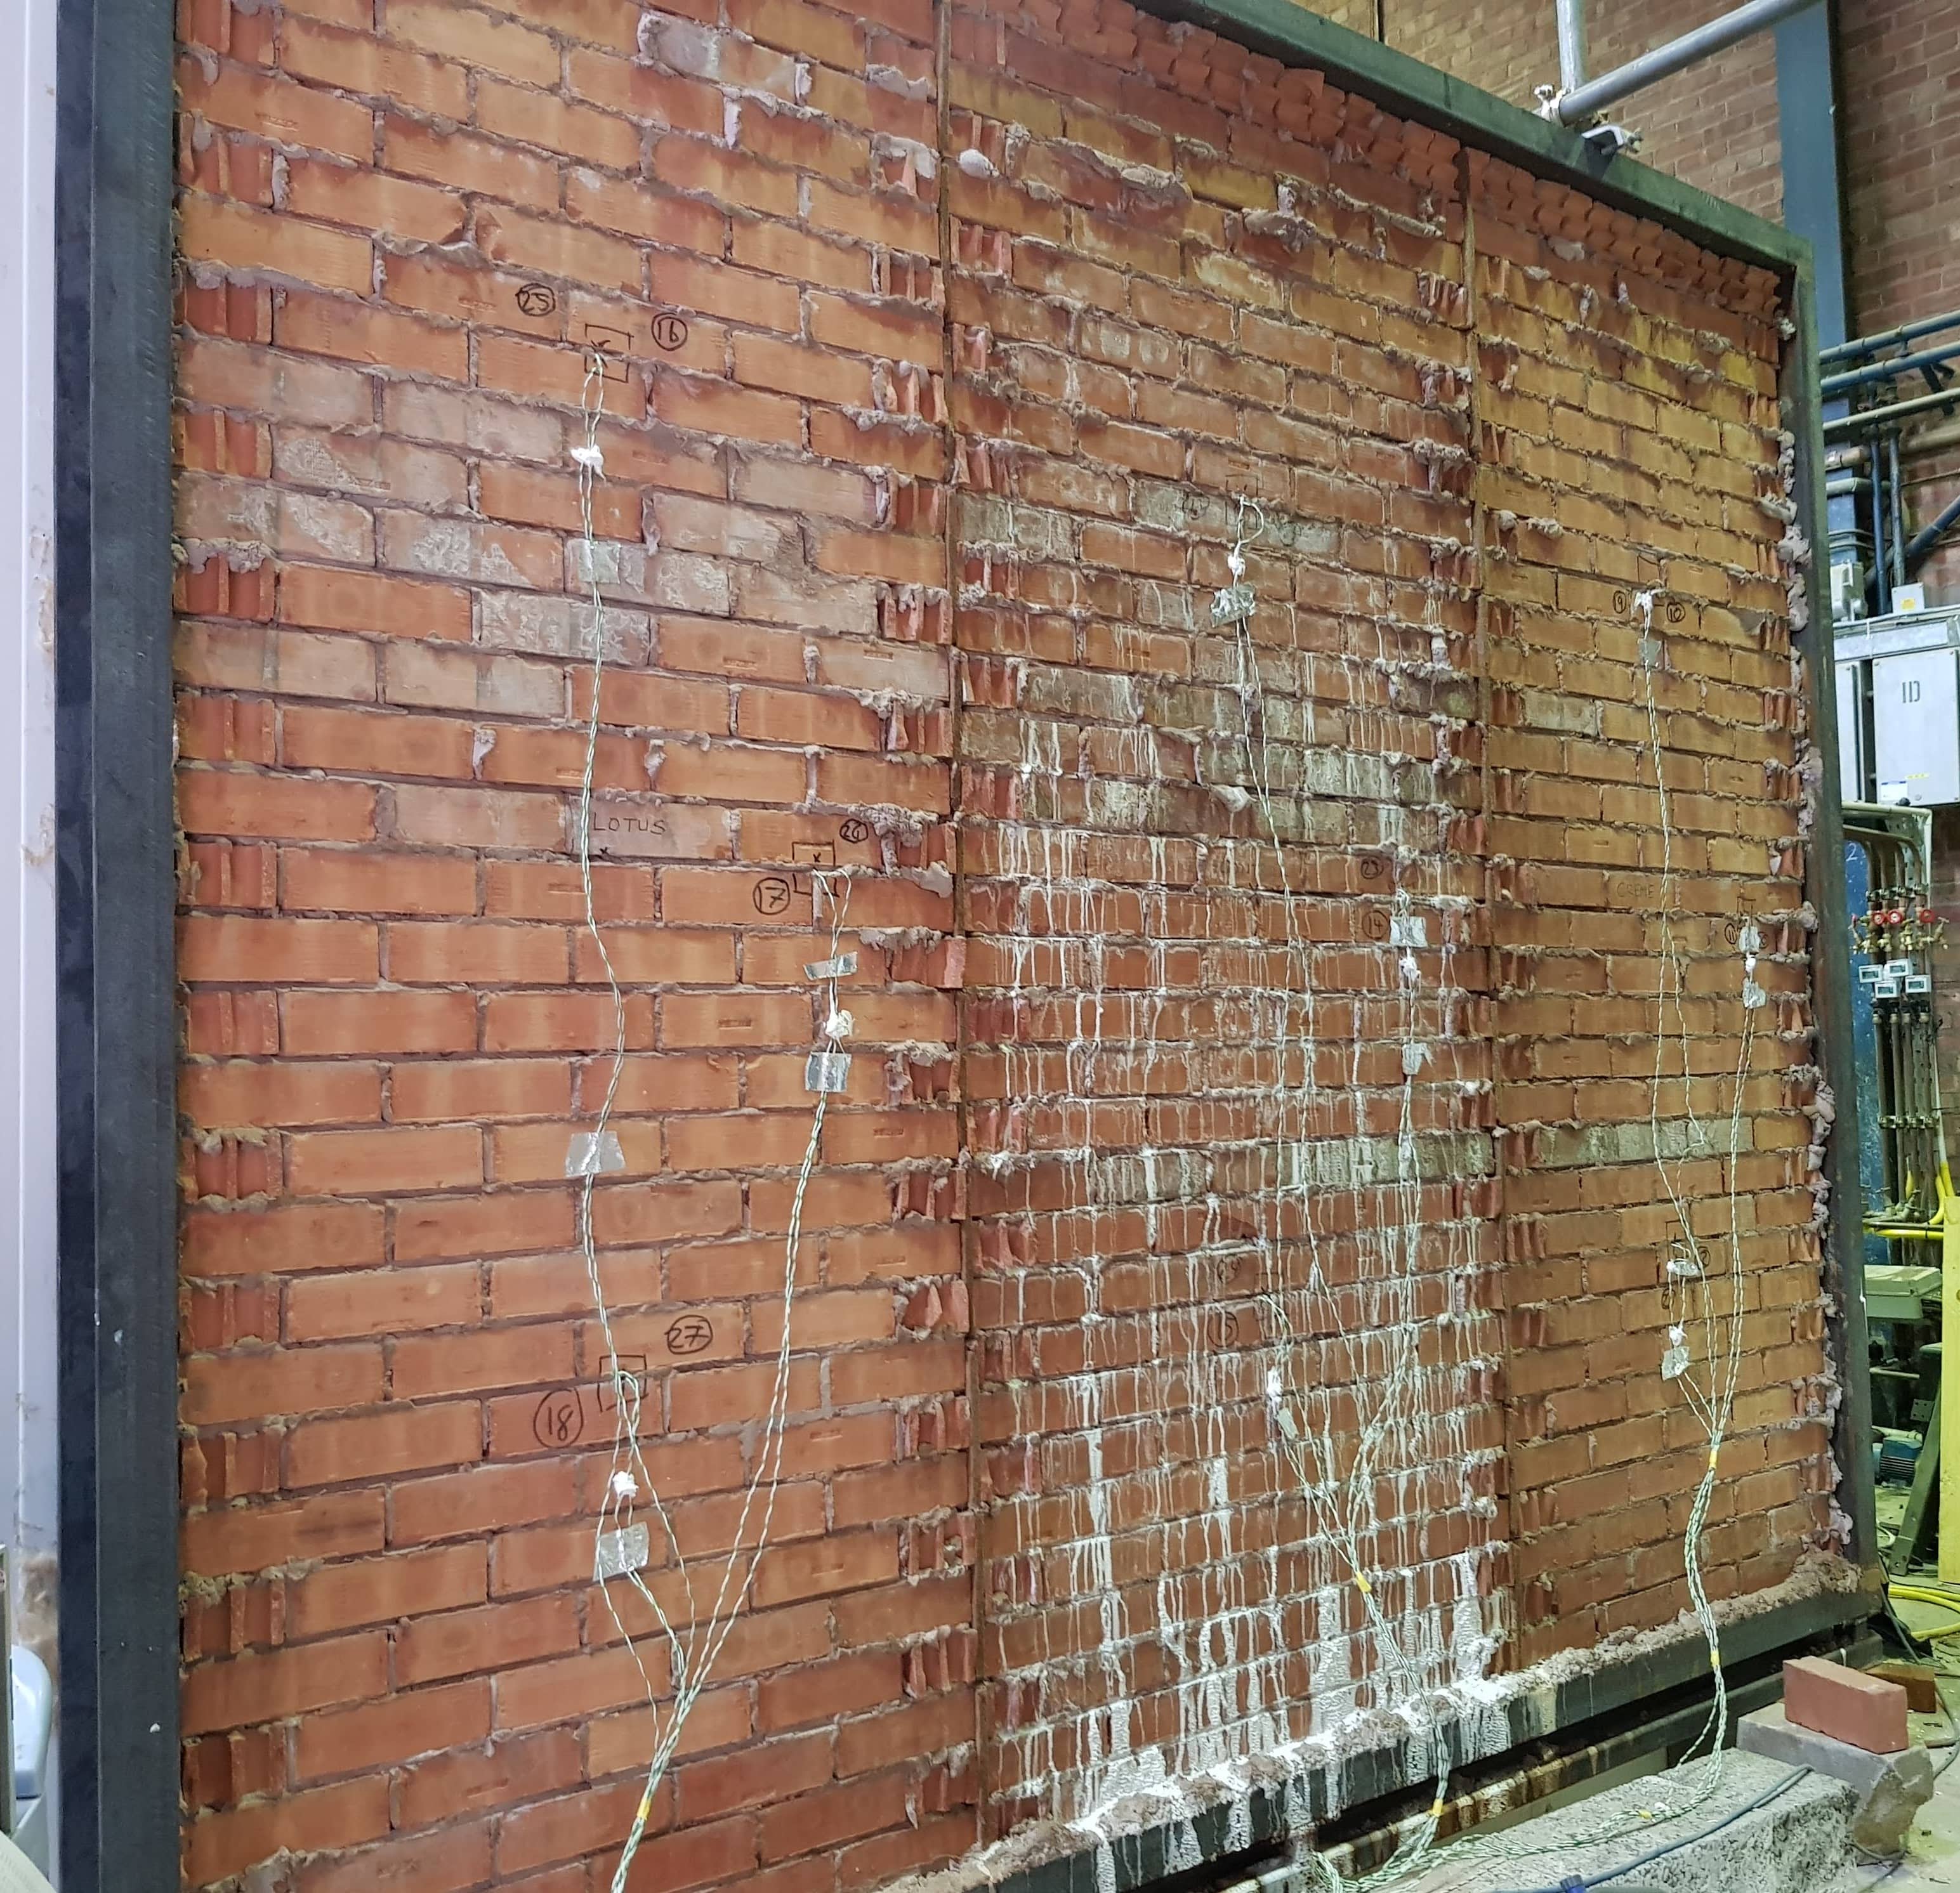 Salt efflorescence on brick wall